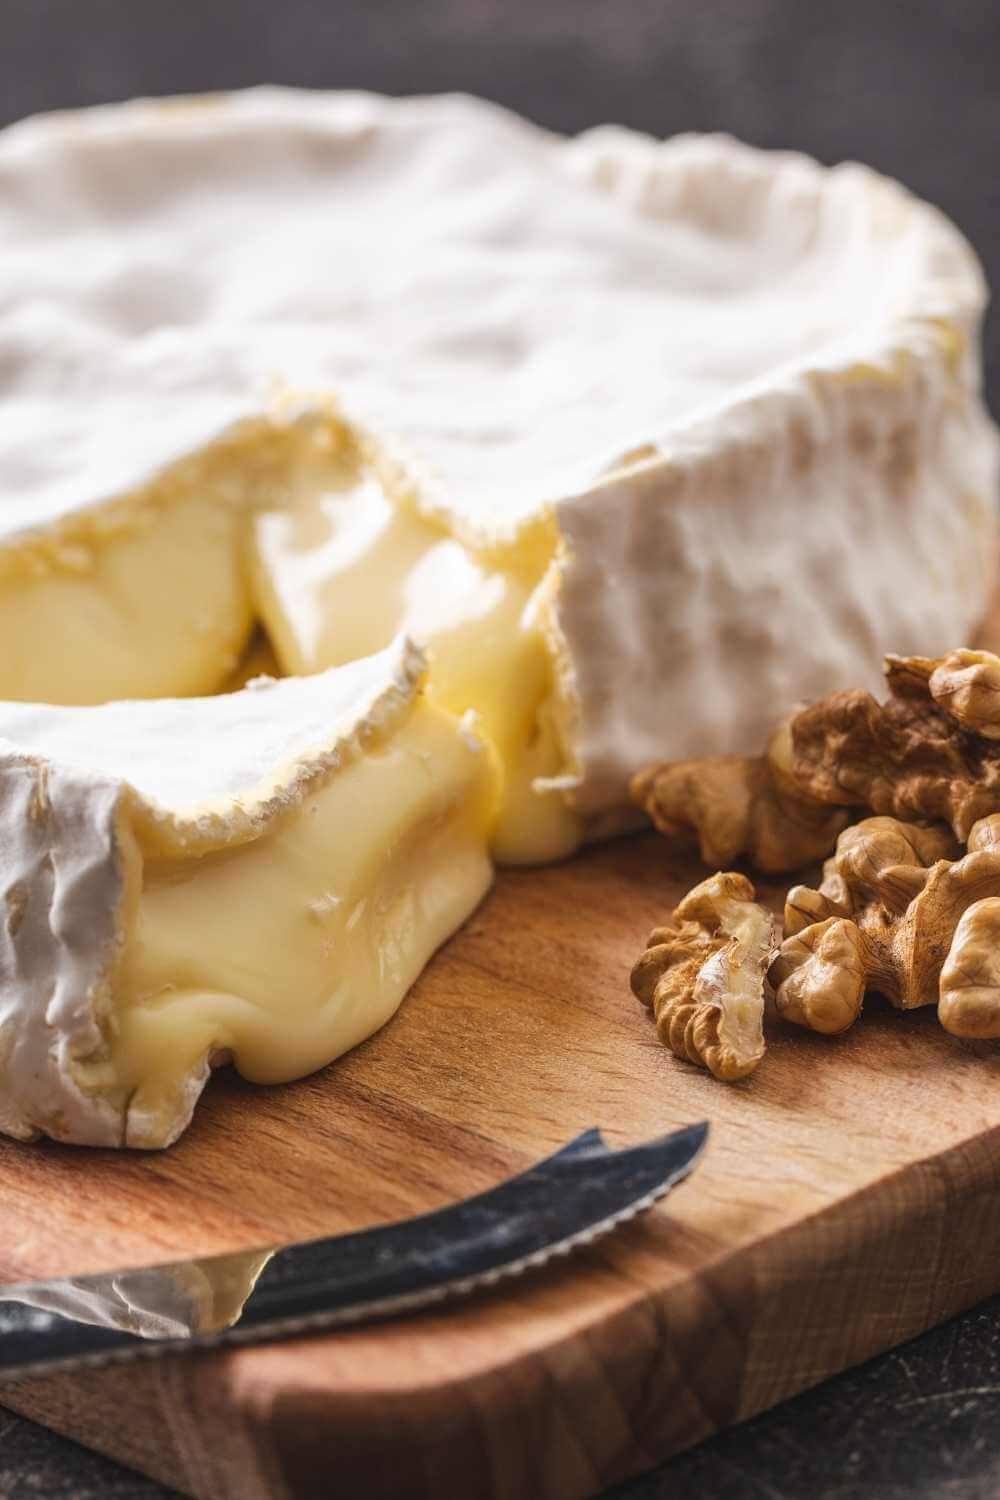 Trader Joe’s Brie Bites Mini Brie Cheese